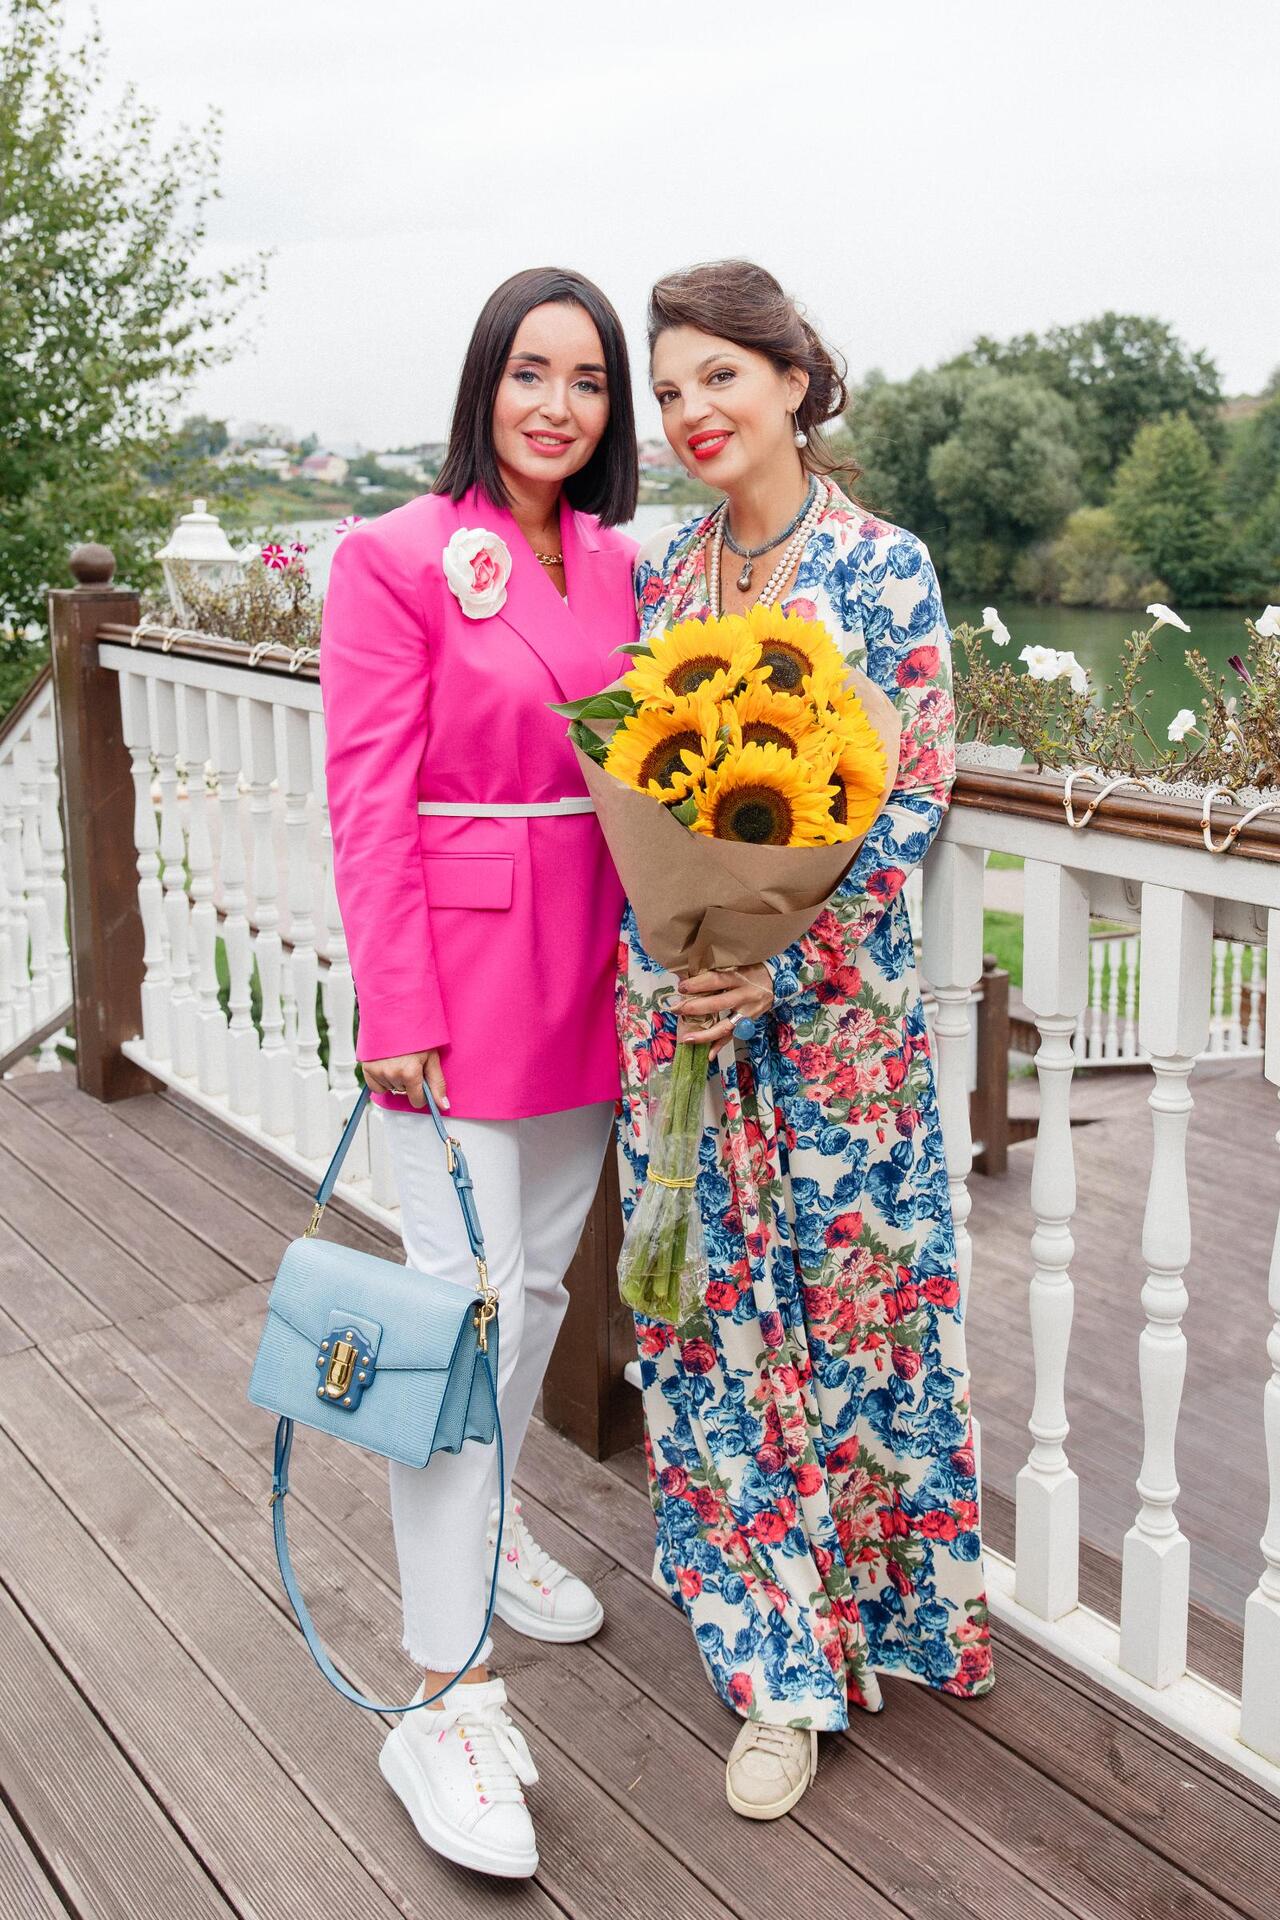 Поля Полякова и Алиса Толкачева